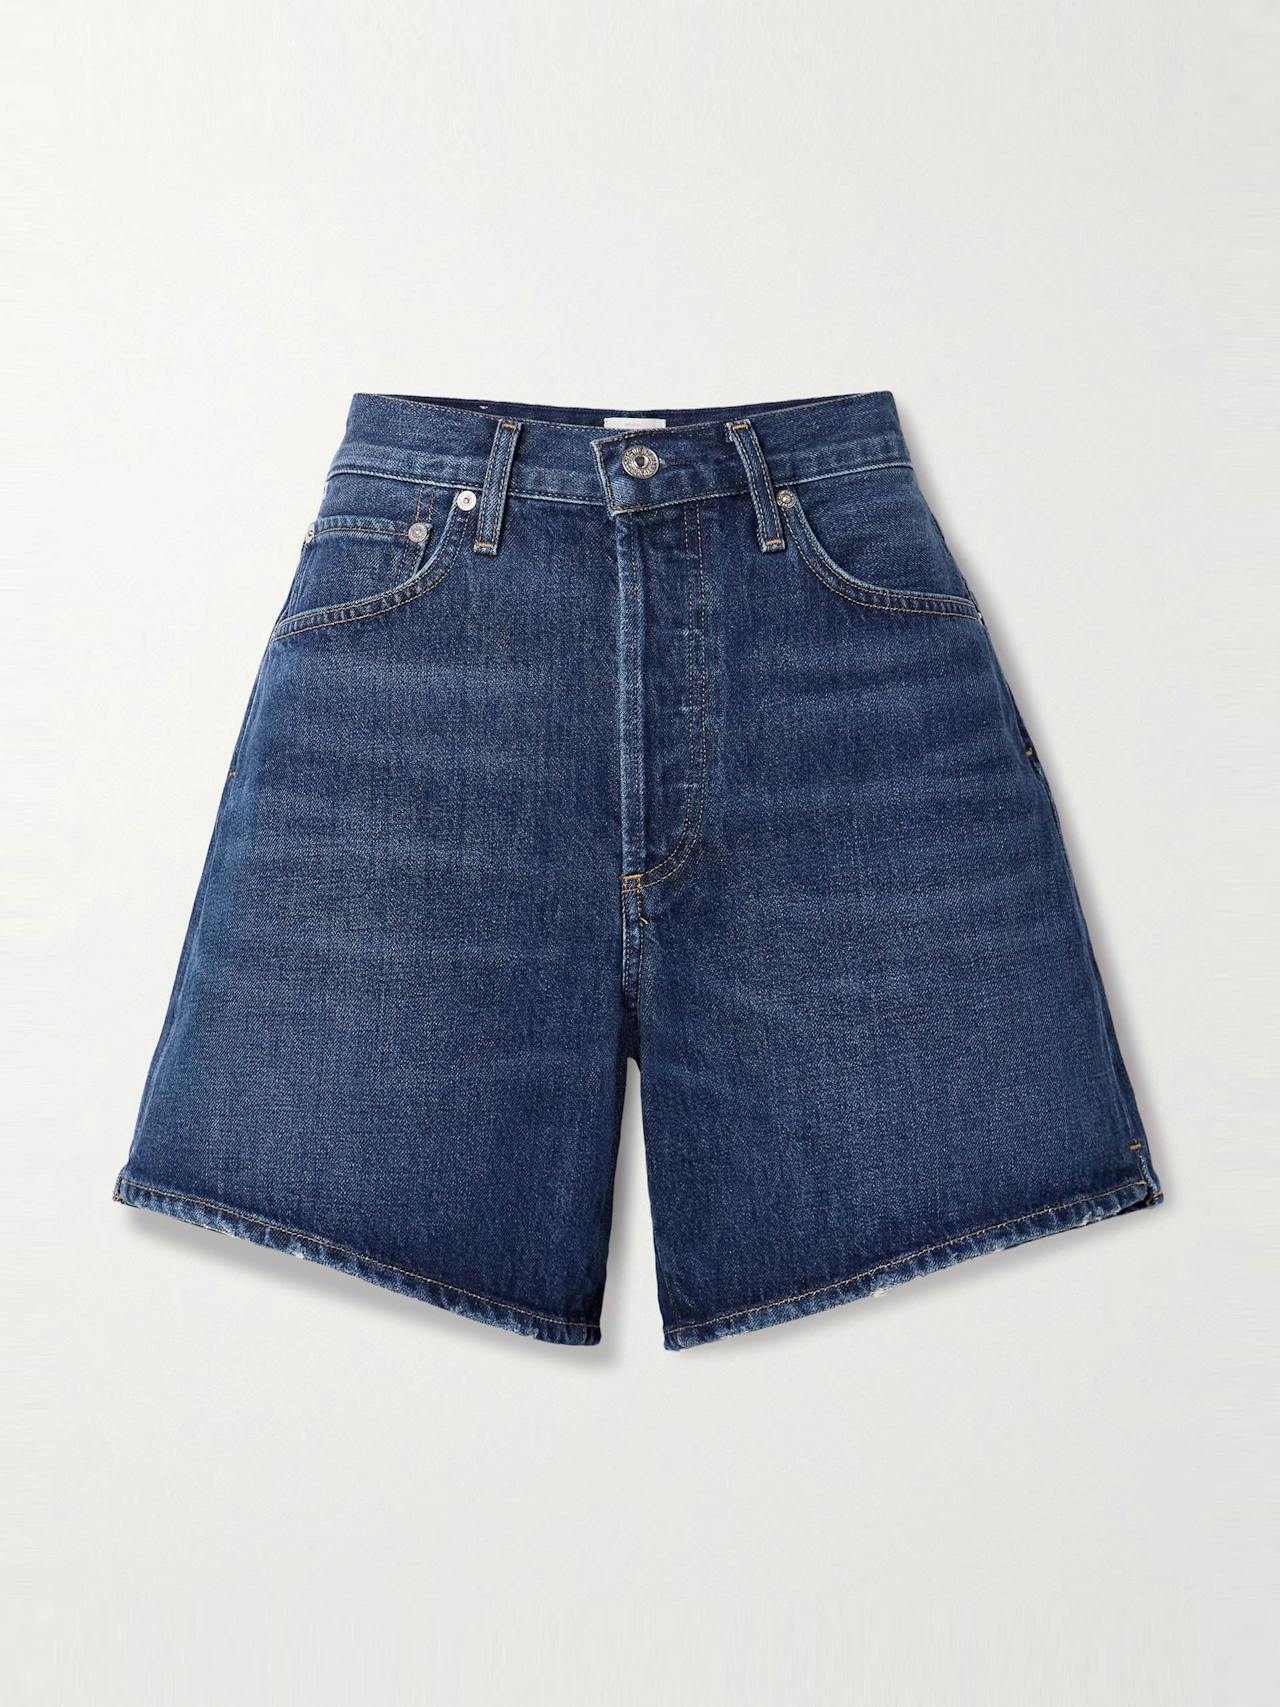 Marlow distressed organic denim shorts